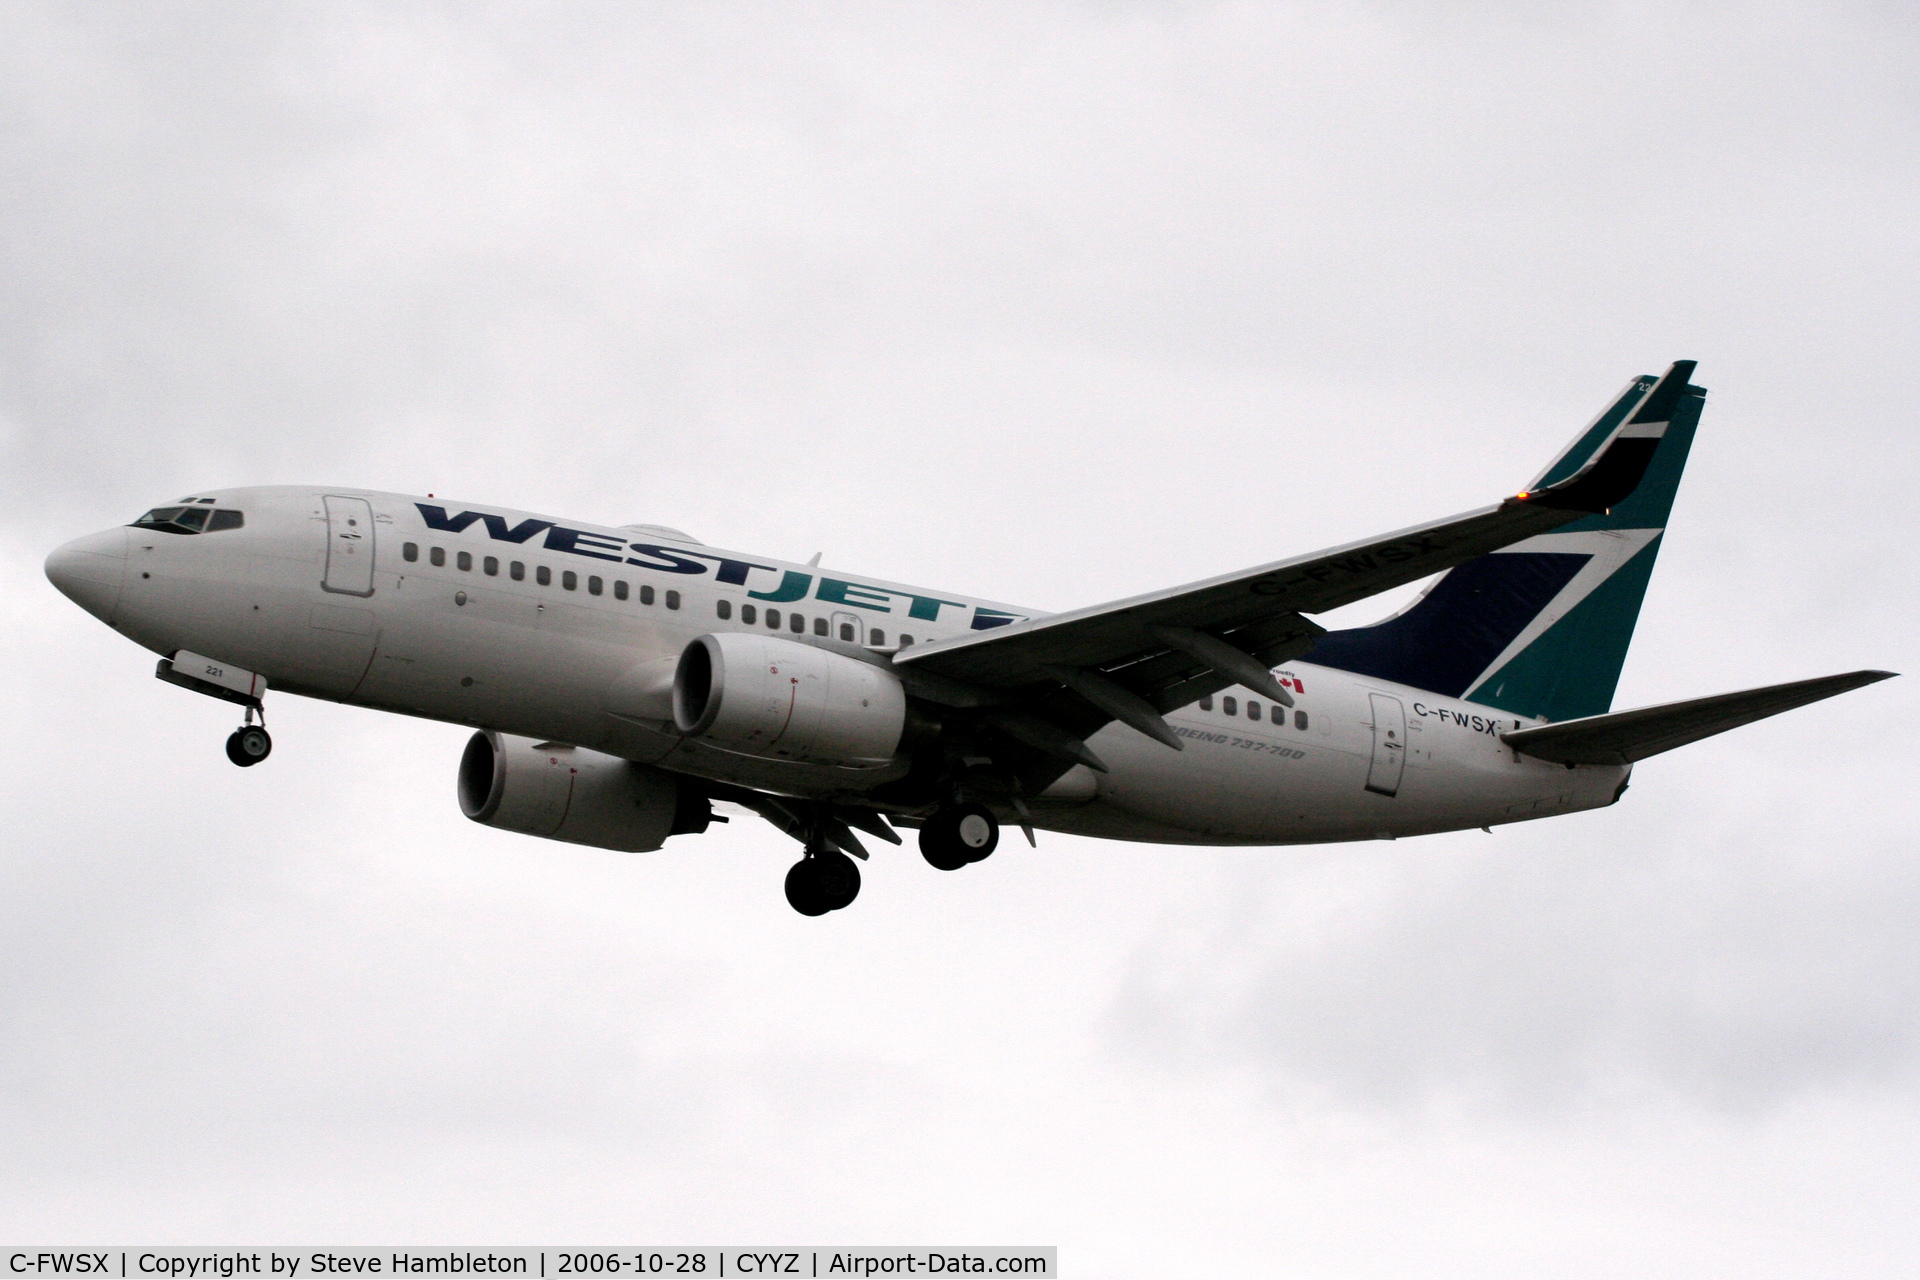 C-FWSX, 2004 Boeing 737-7CT C/N 32761, Short Finals at Toronto - Over 